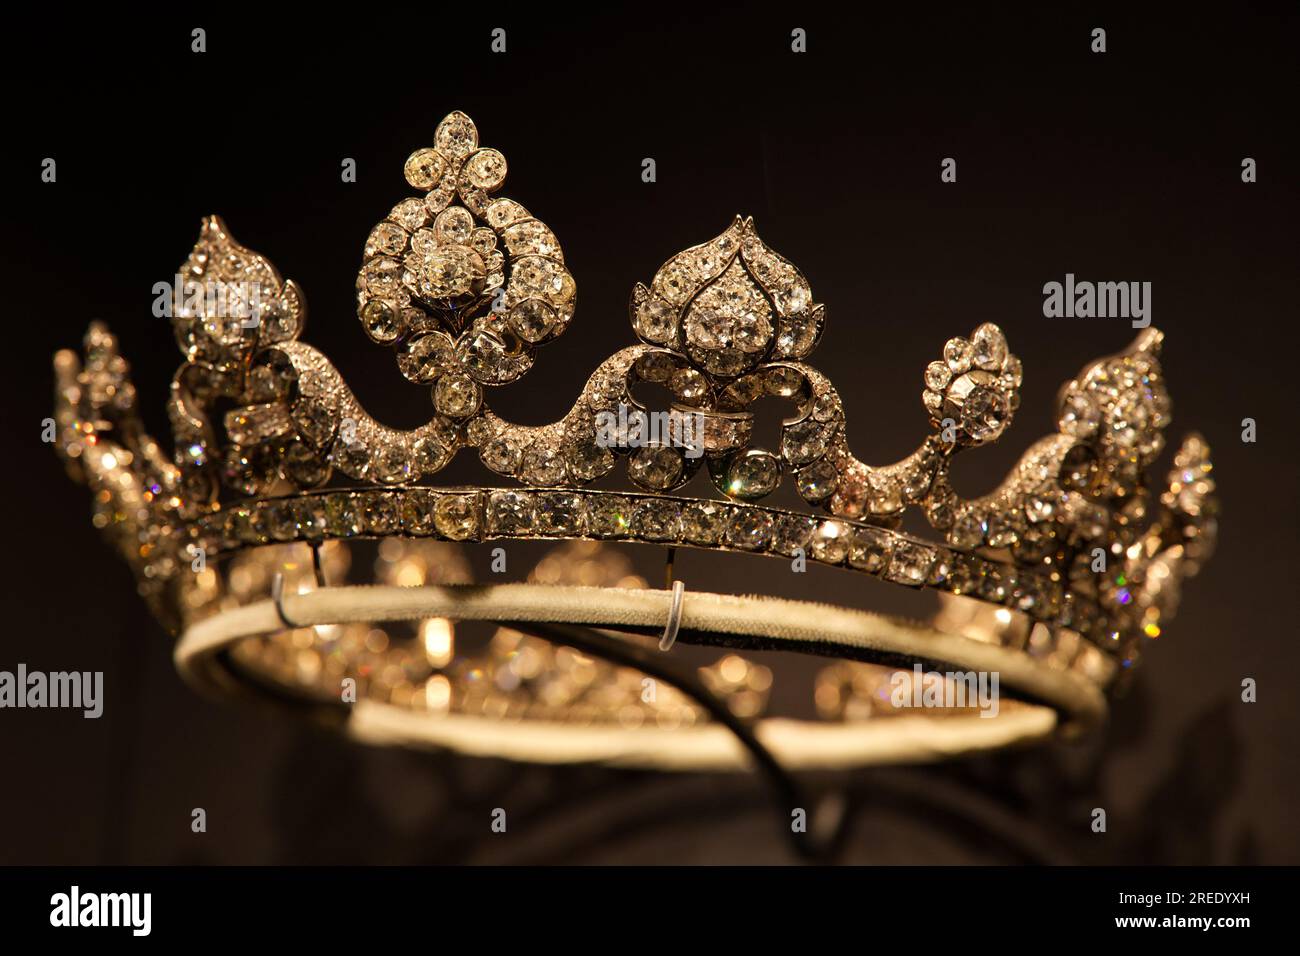 Empress eugenie tiara hi-res stock photography and images - Alamy